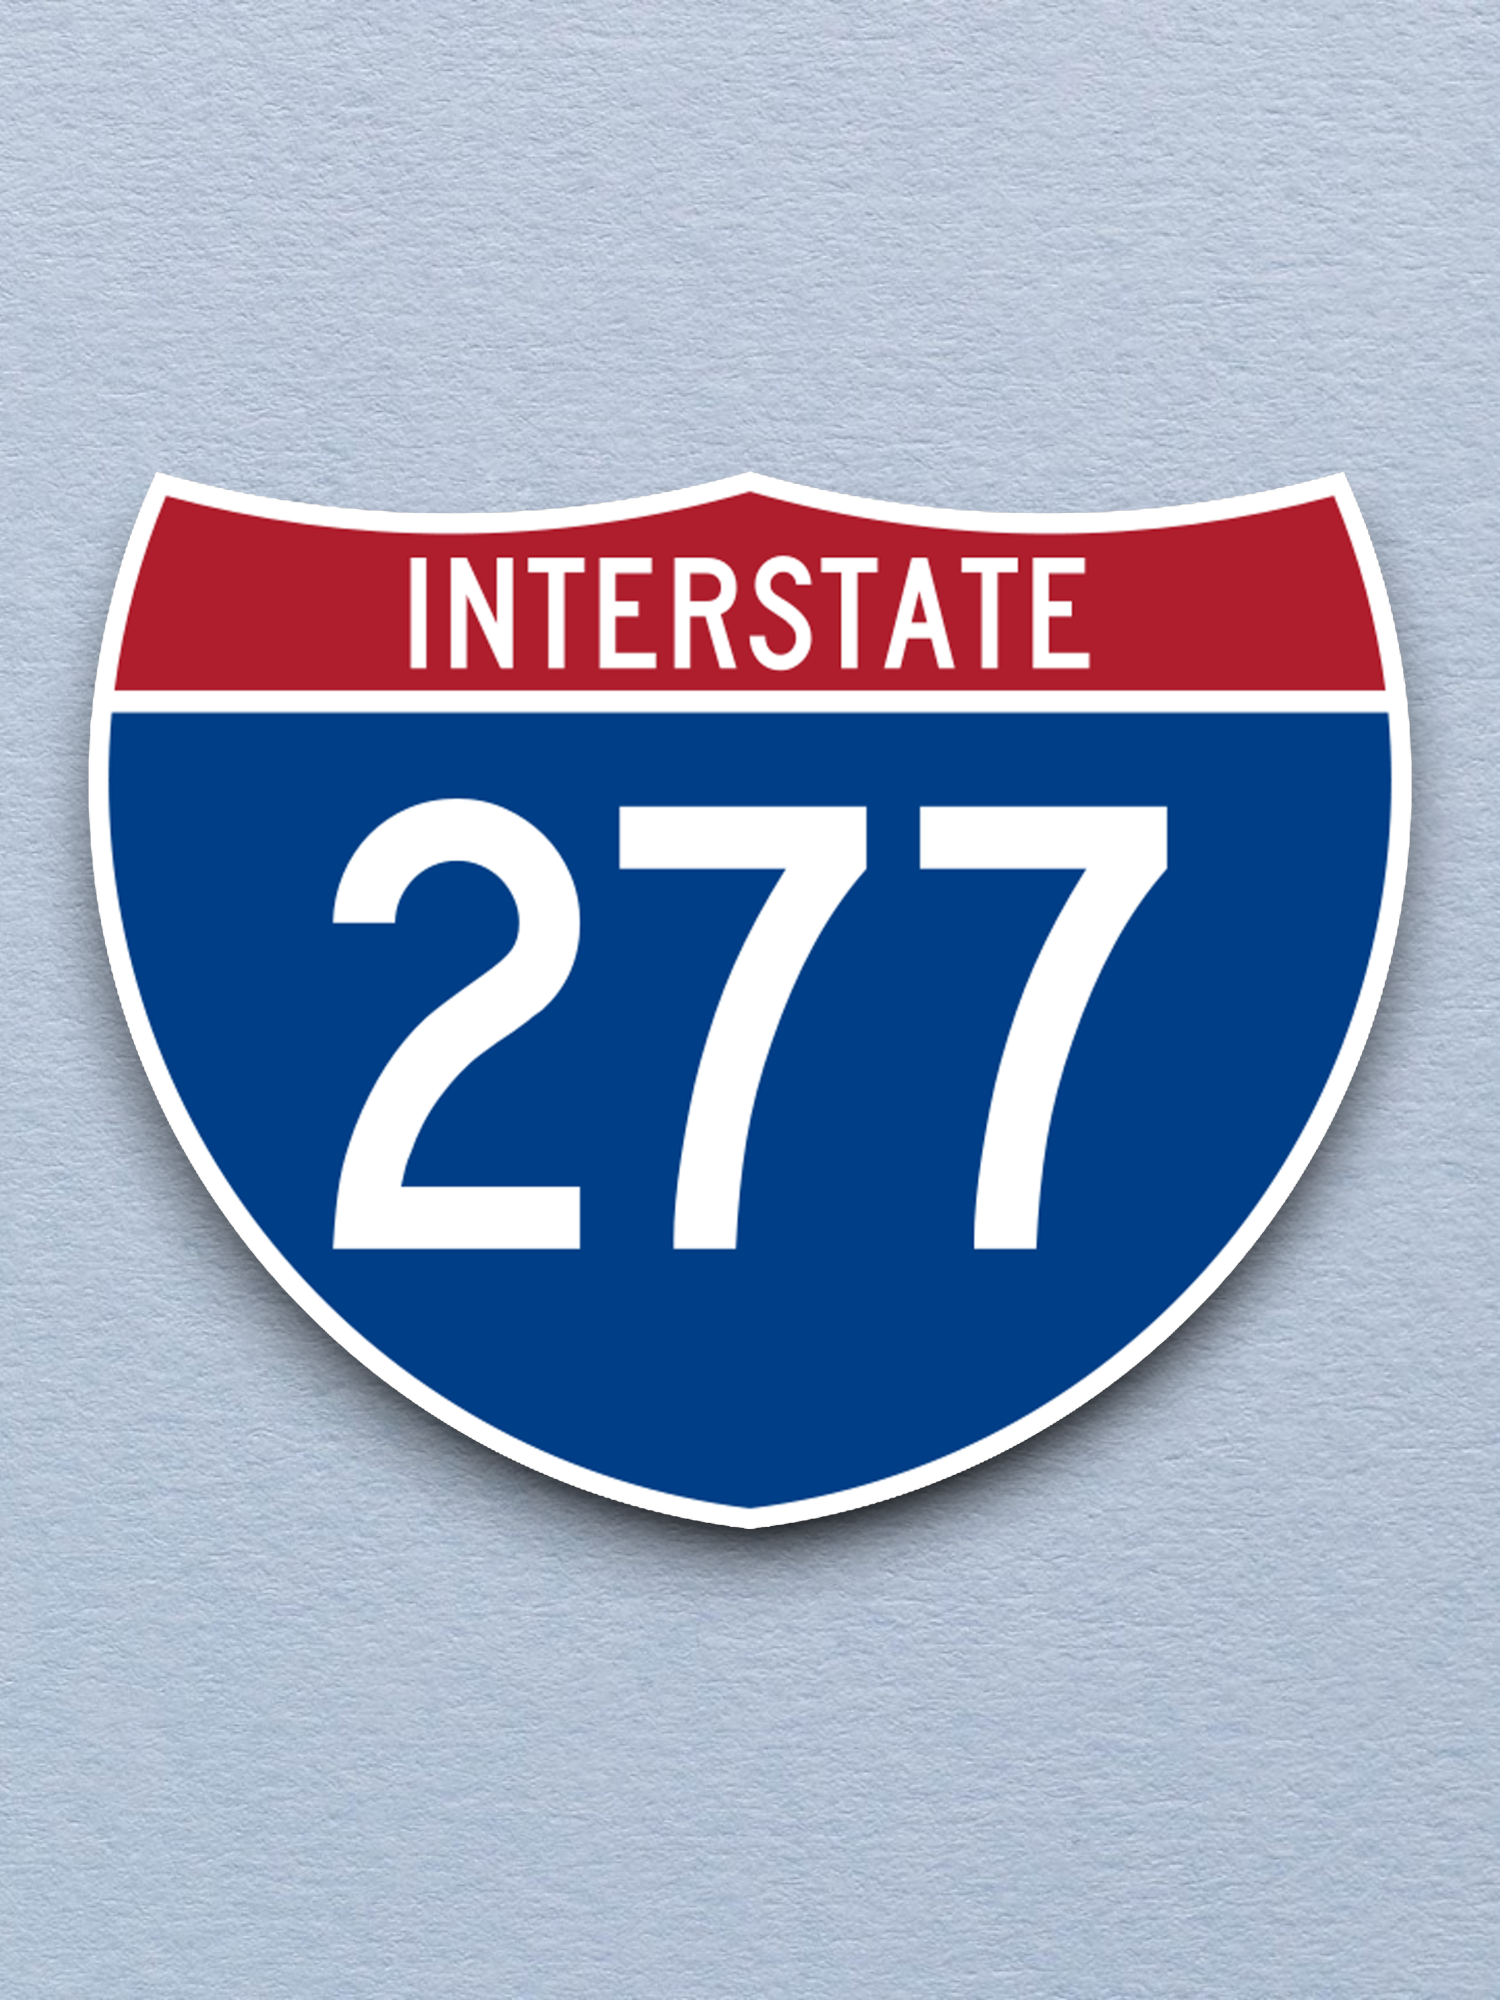 Interstate I-277 Road Sign Sticker